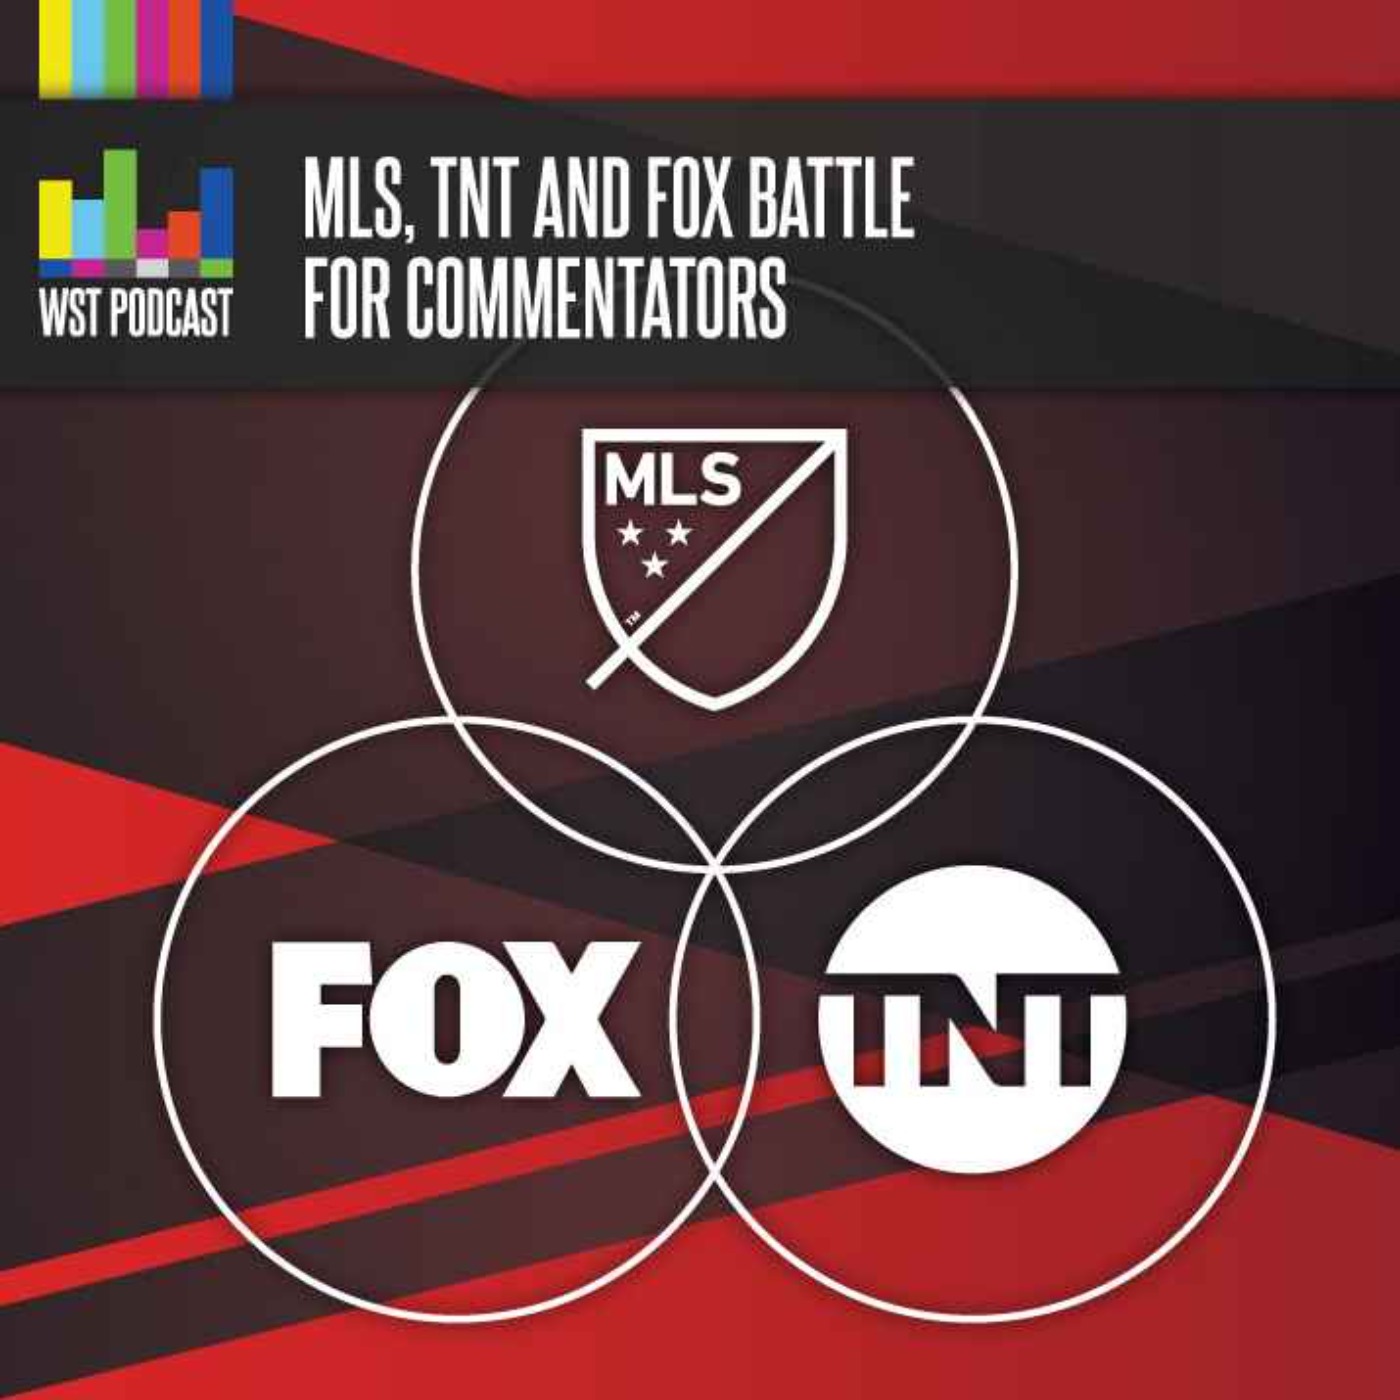 MLS, TNT and FOX battle for commentators